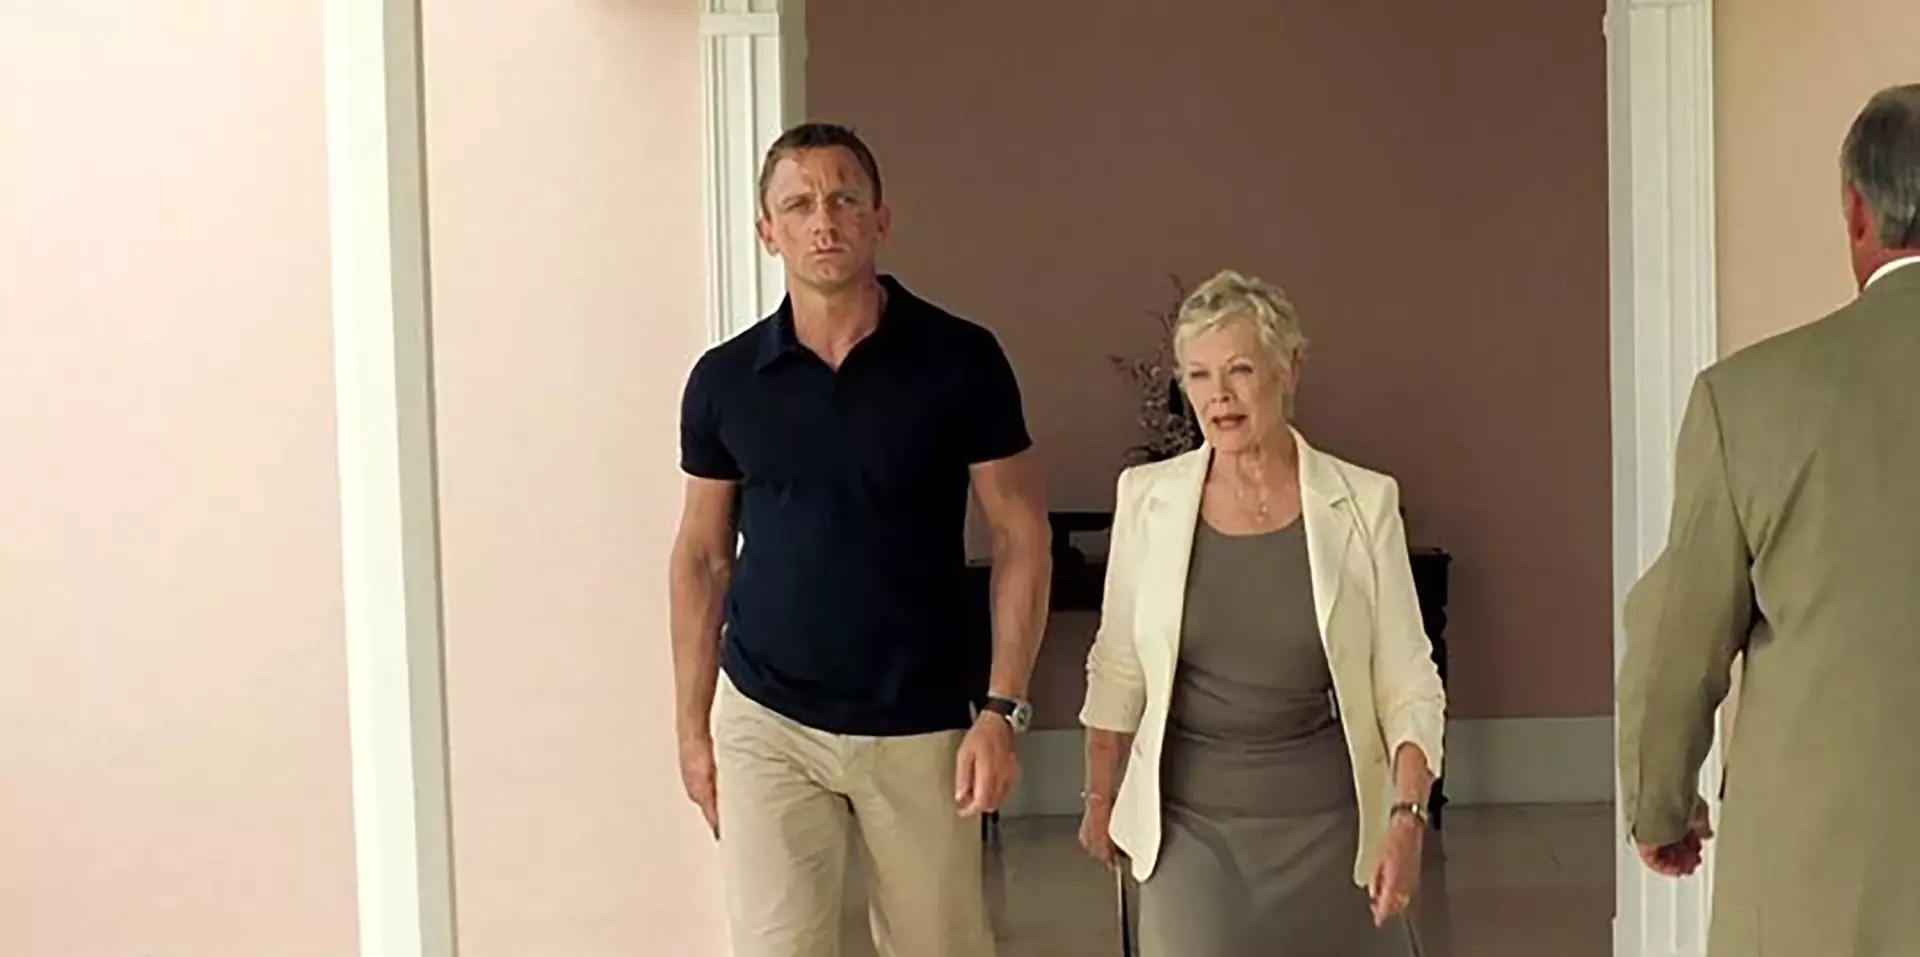 Get The Look: Stylish Menswear Inspired by Daniel Craig in Sunspel